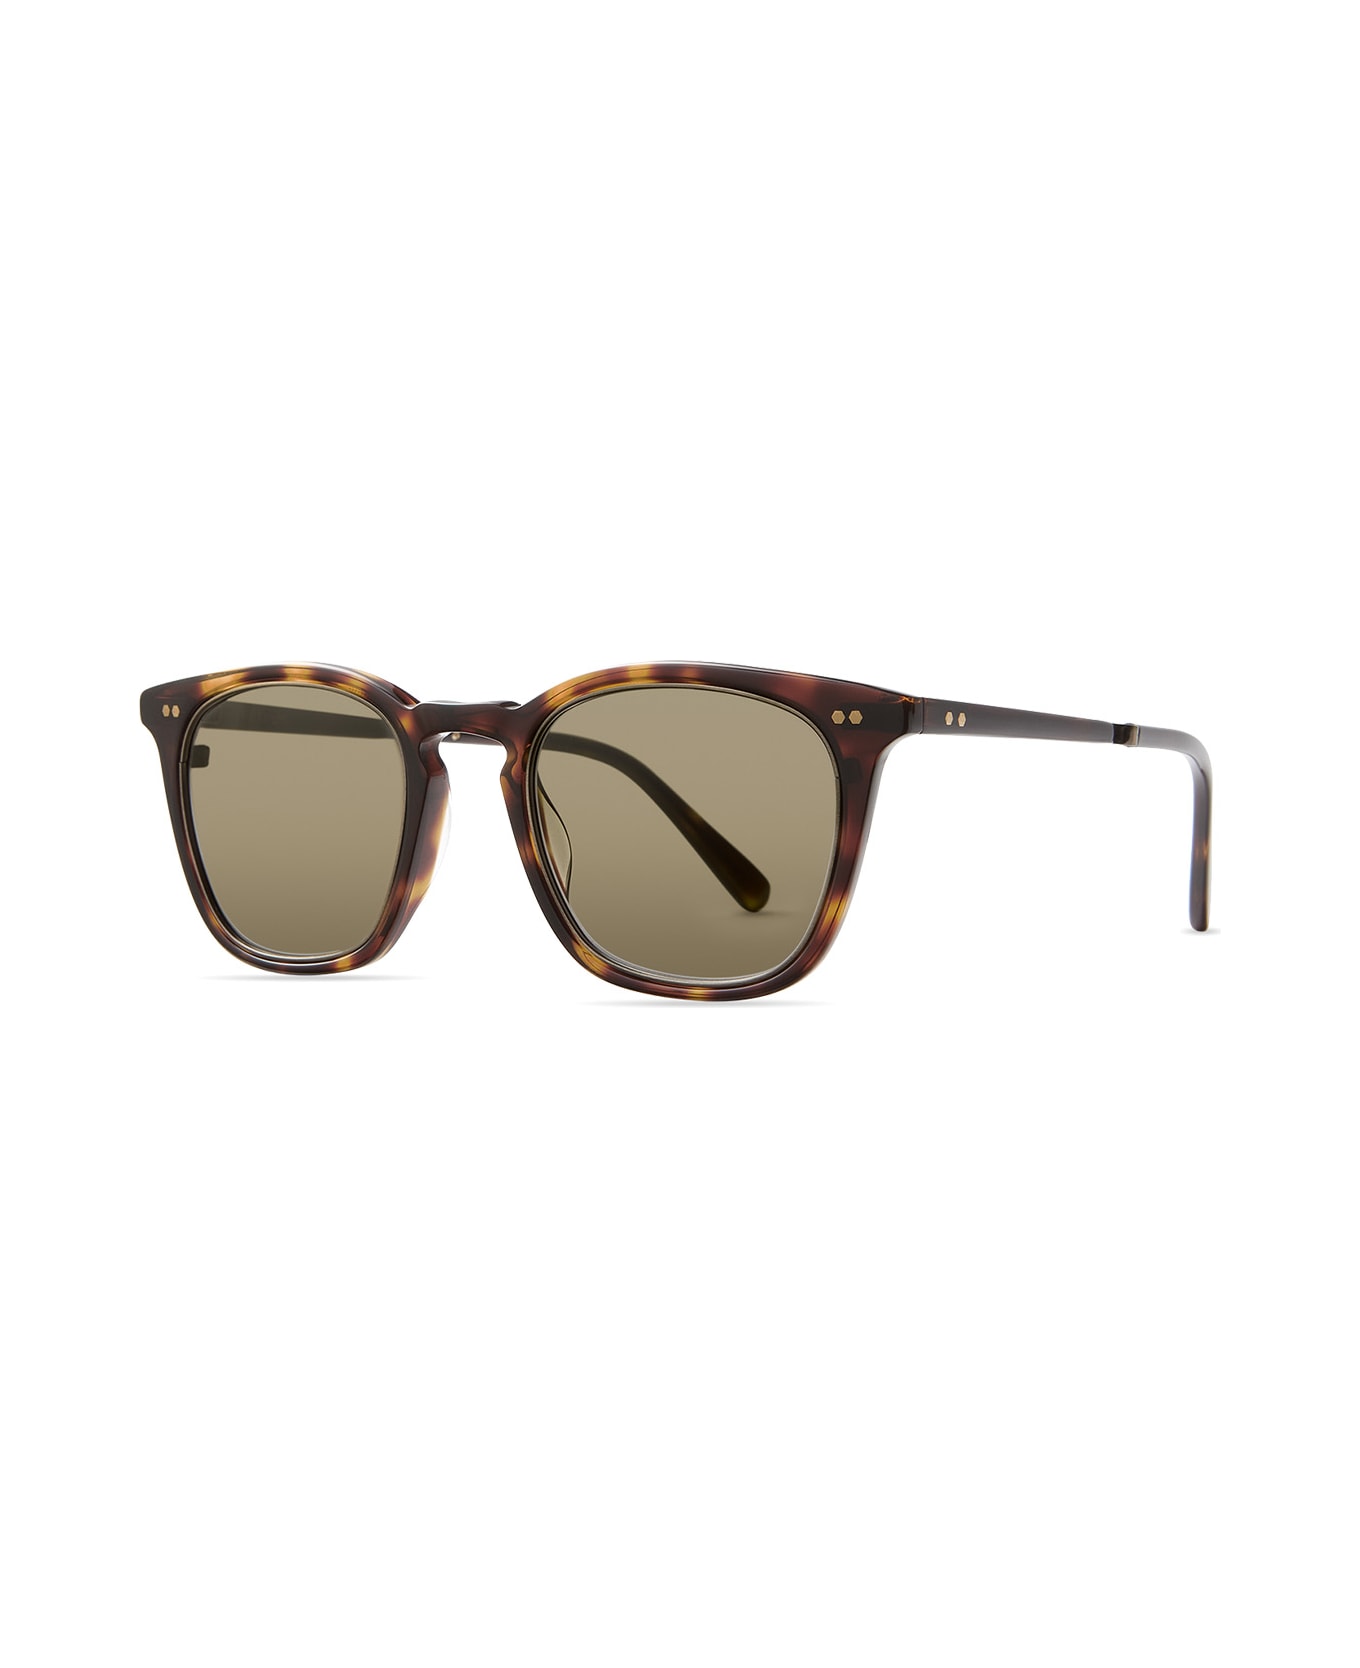 Mr. Leight Getty Ii S Honu Tortoise-antique Gold Sunglasses - Chloé Eyewear Poppy octagonal-frame sunglasses